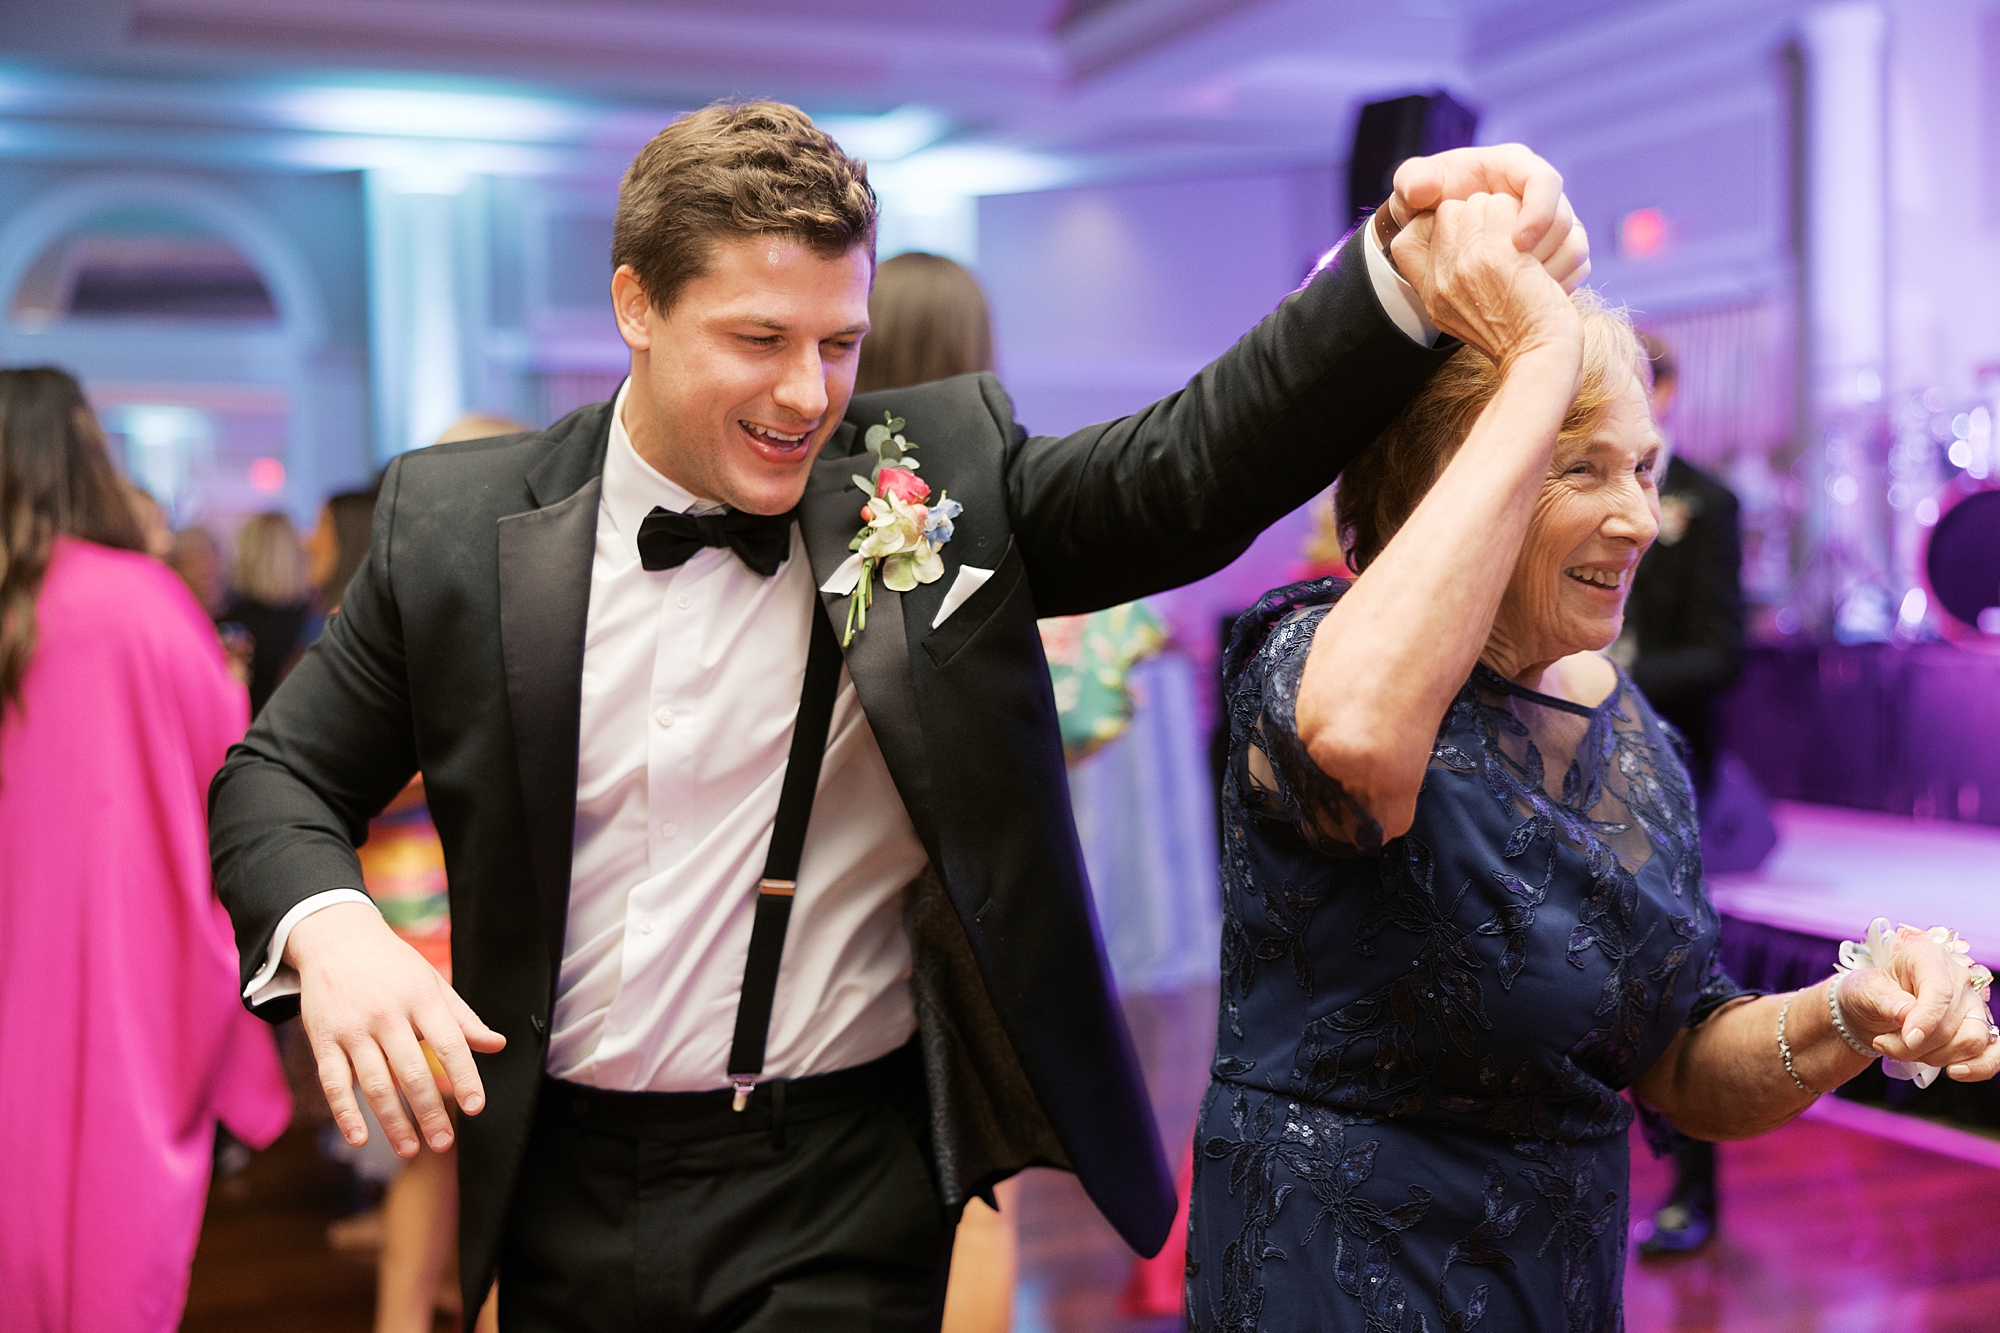 groom dances with wedding guests during NOLA wedding reception 